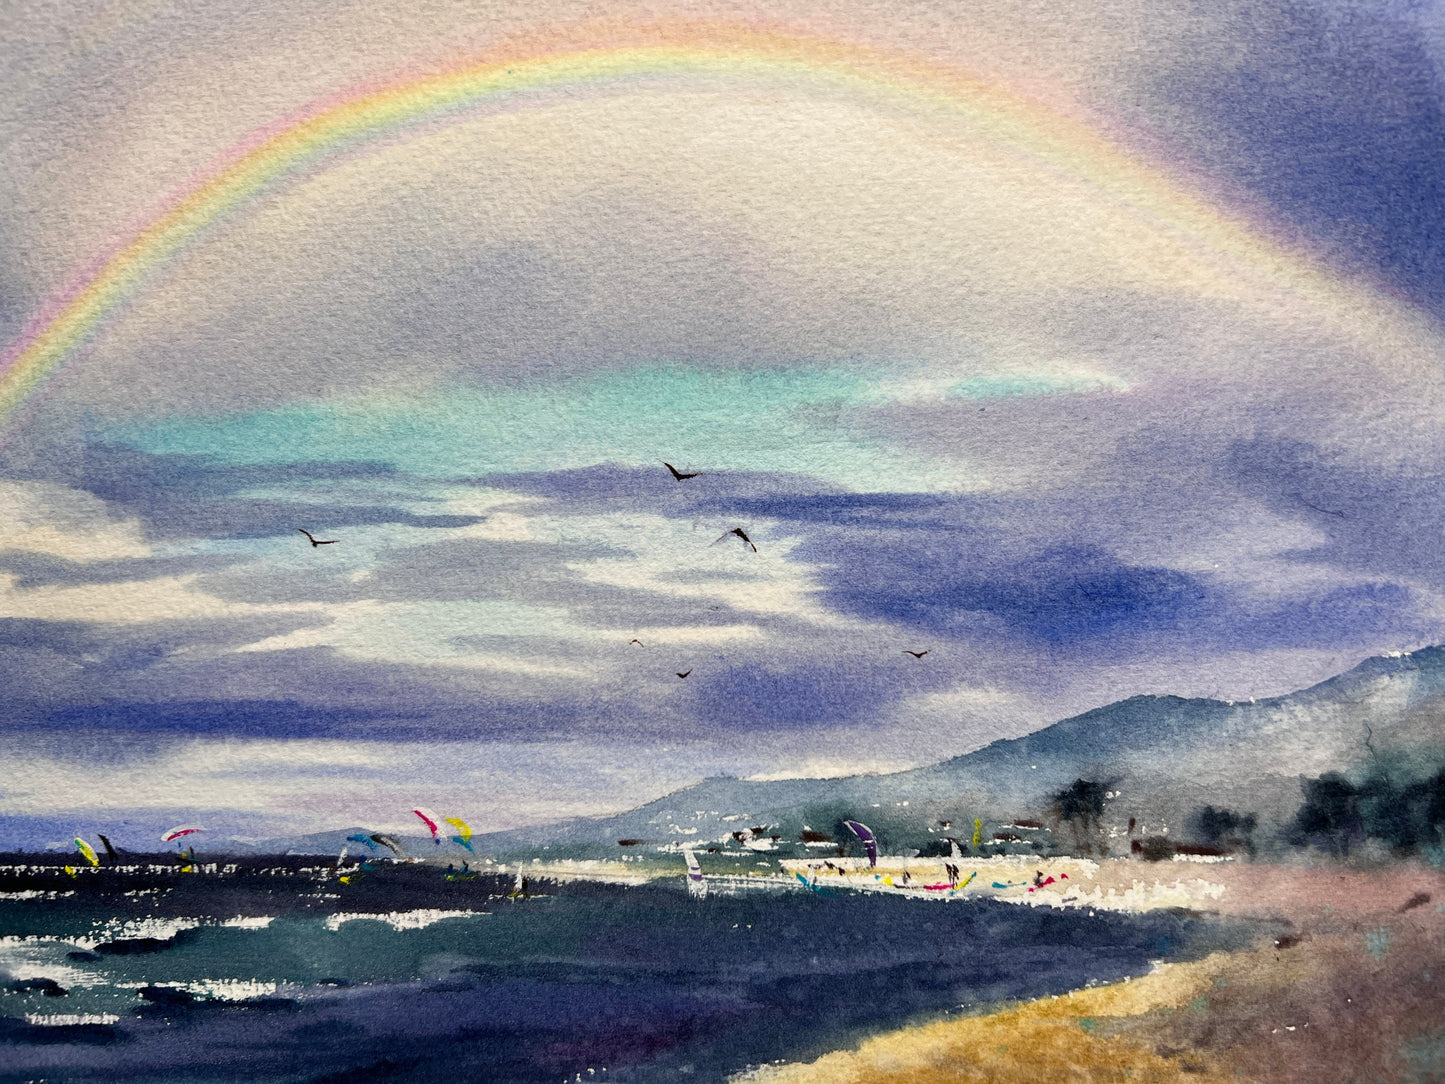 Sea Beach Painting Small, Original Watercolor, Rainbow Artwork, Blue Wave Kite Art, Coastal Home Wall Decor, Gift